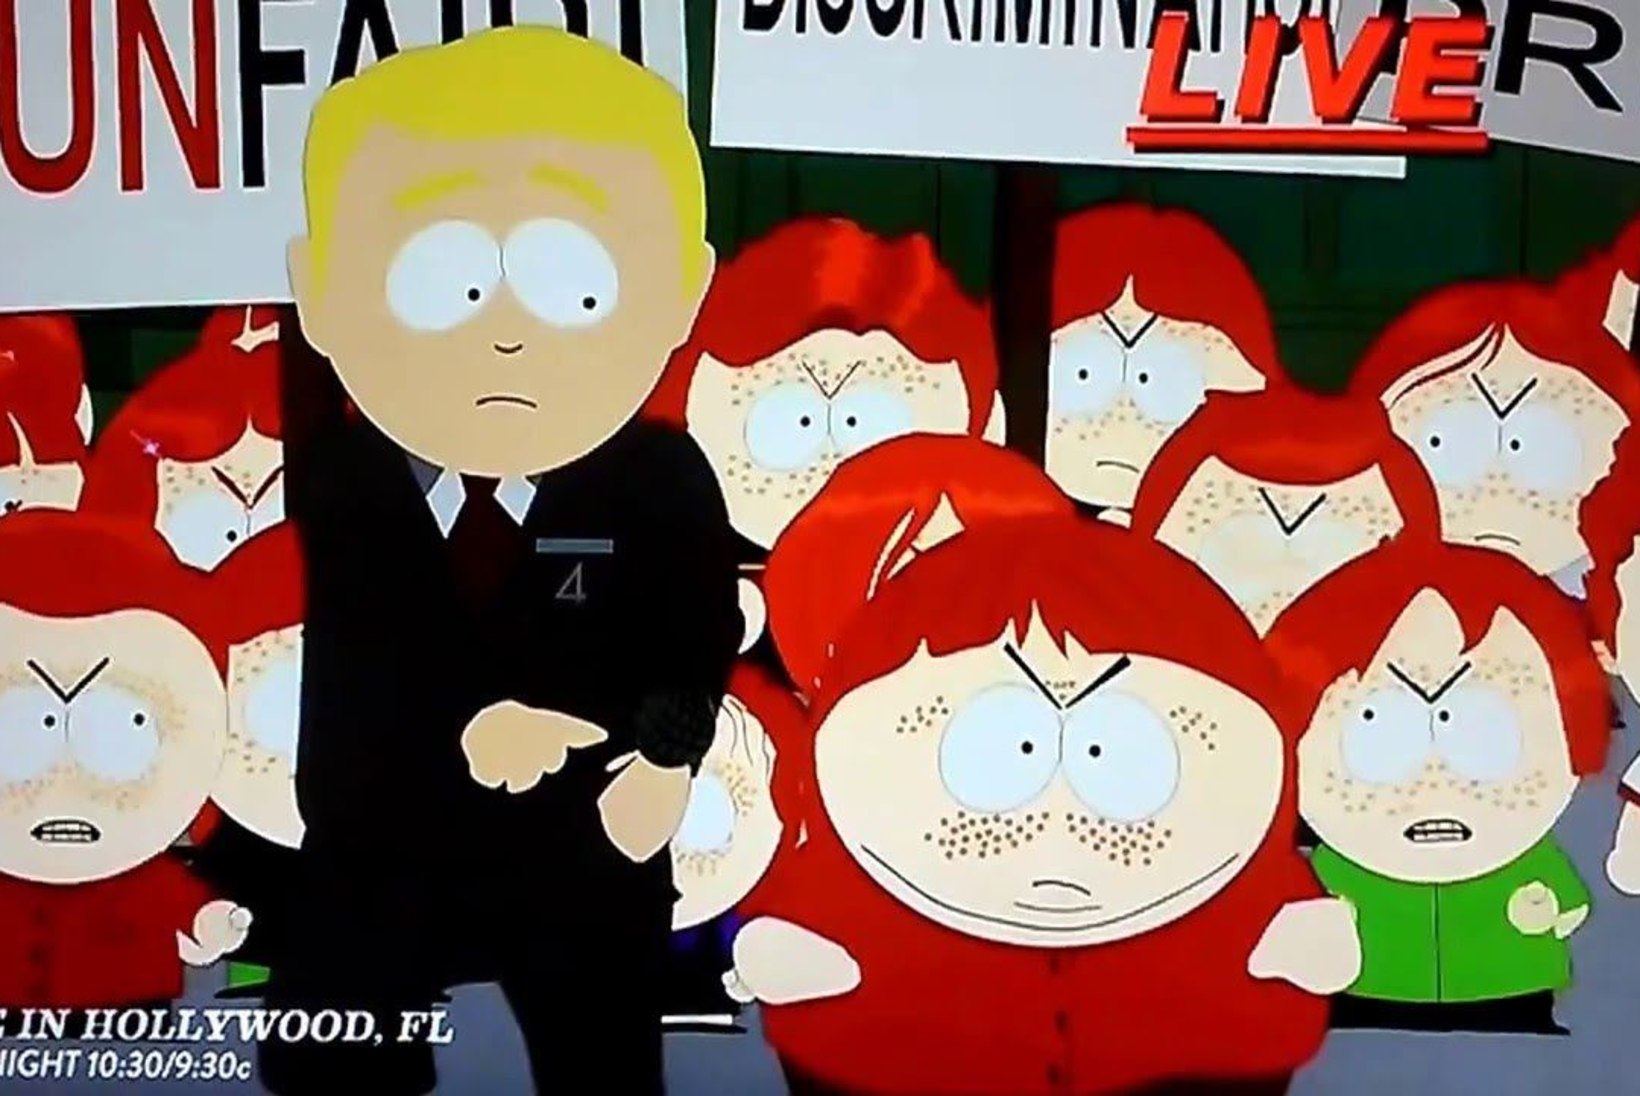 Miks ei tee kurikuulus "South Park" satiiri Donald Trumpist?